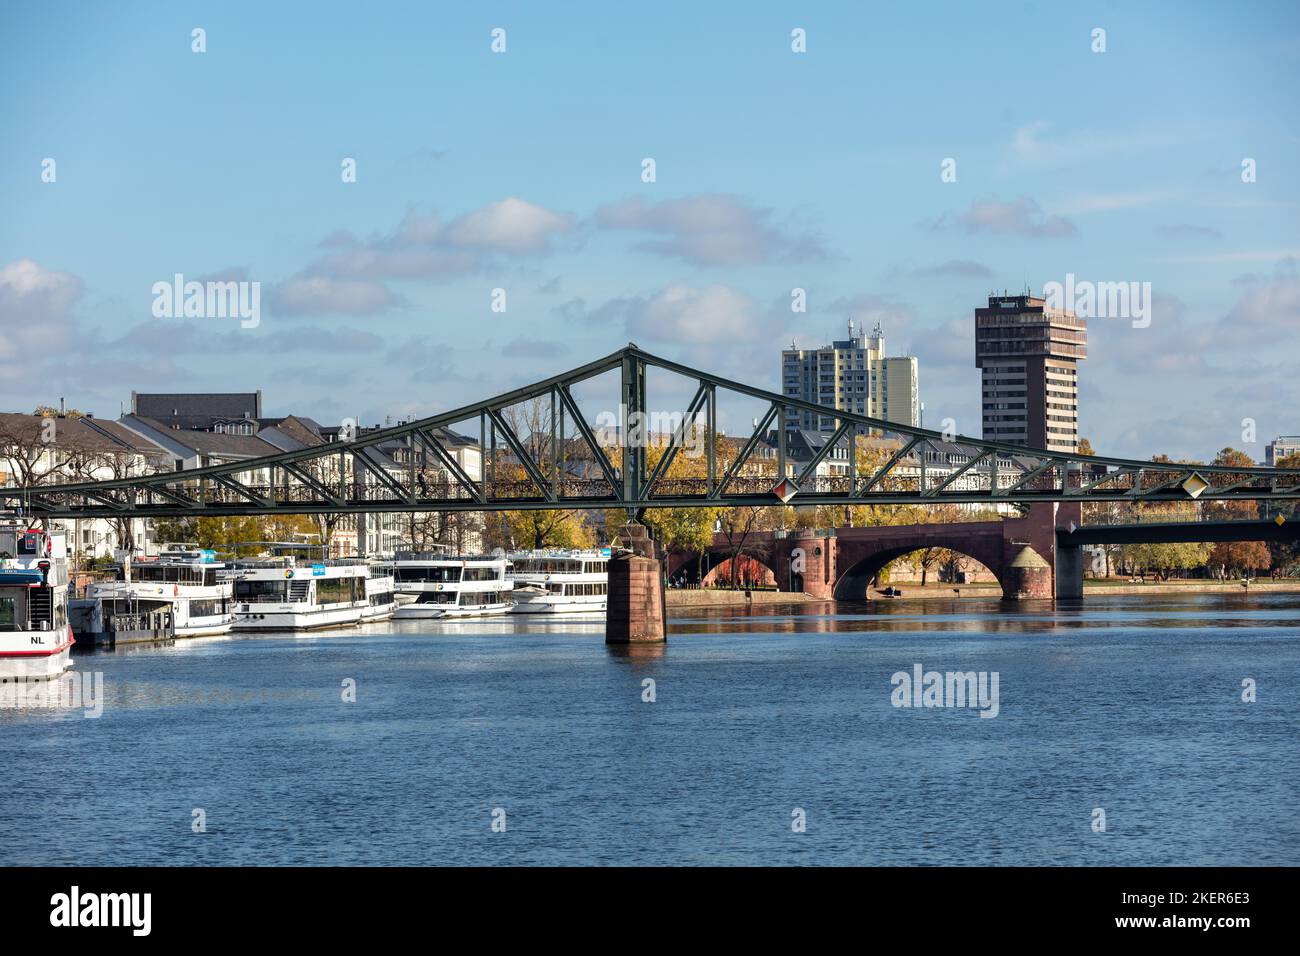 Frankfurt with Rhein river and wonderful bridges Stock Photo